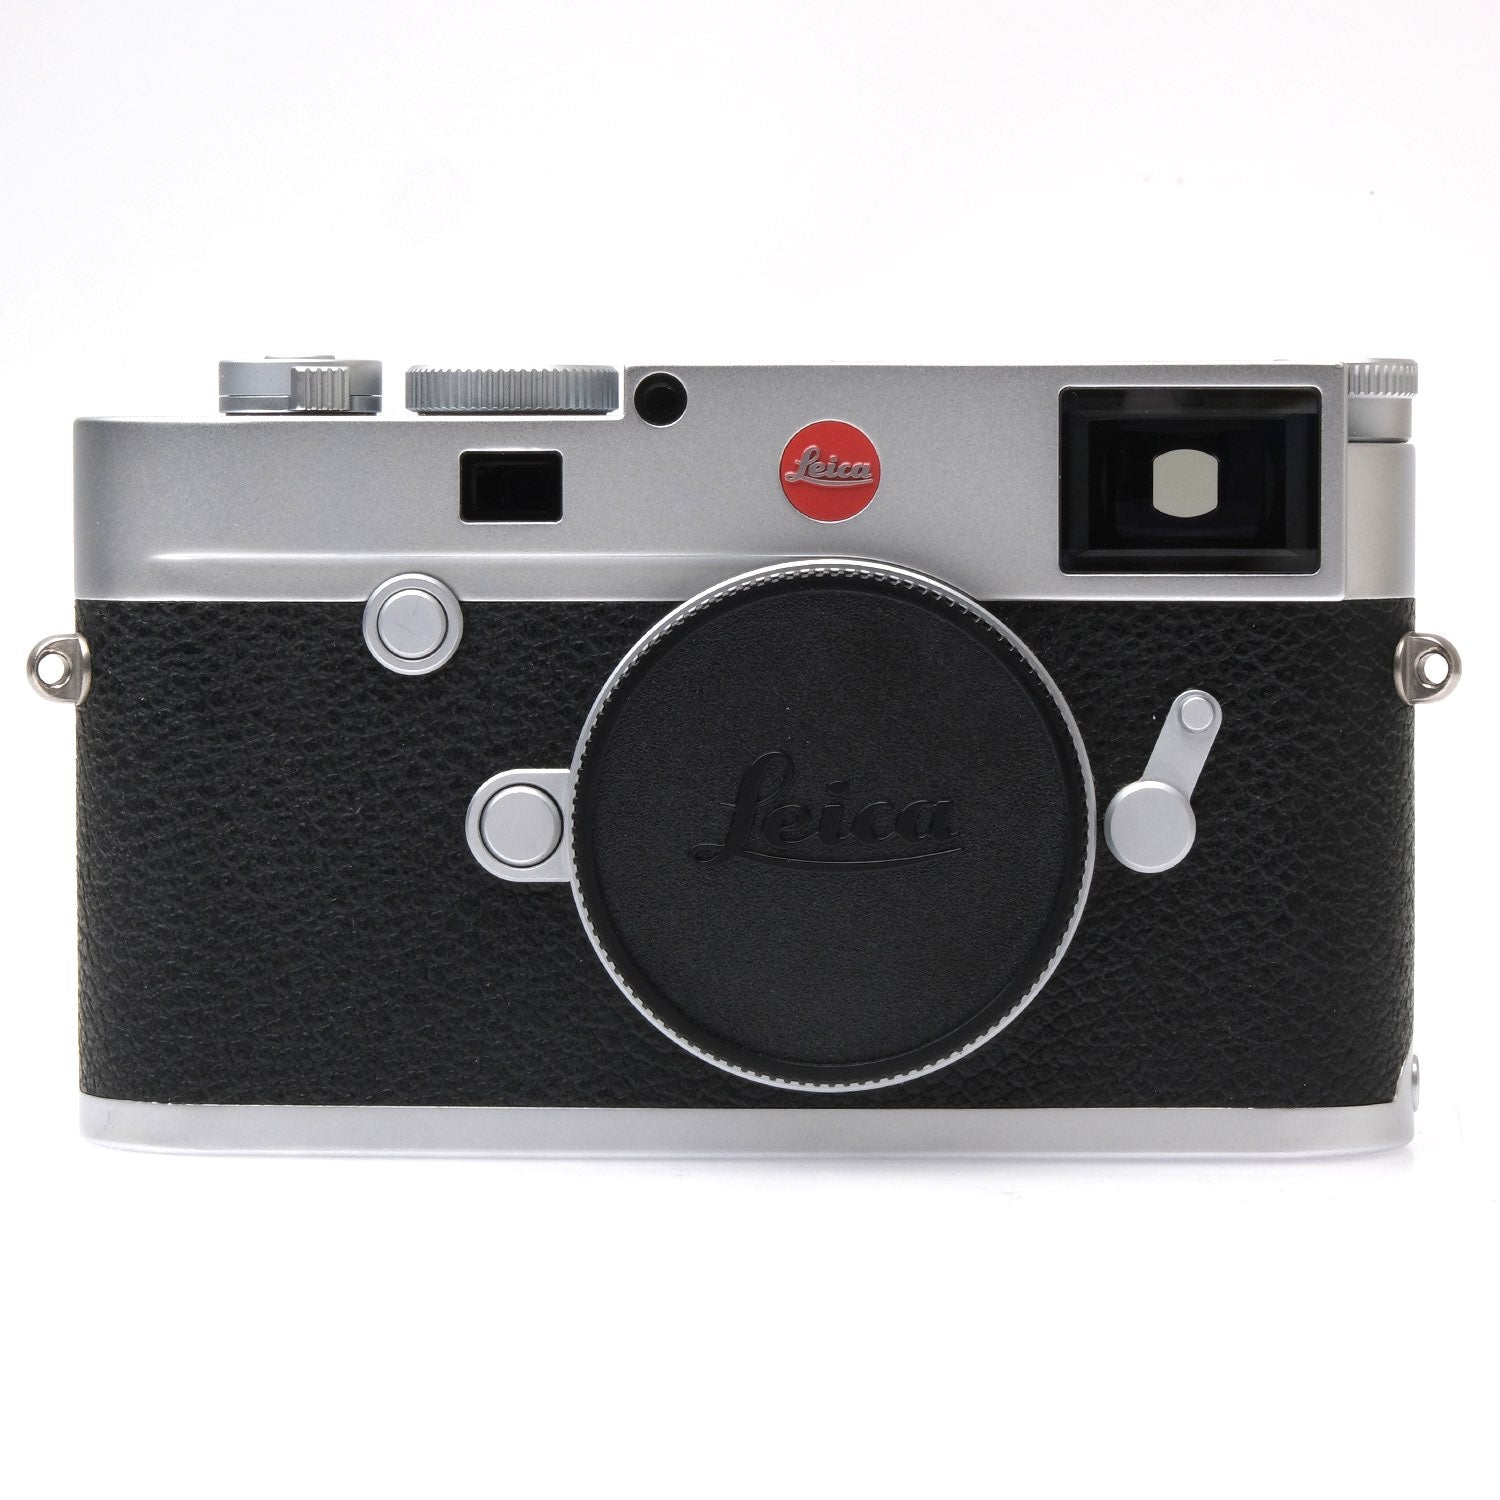 Leica M10 Silver, Boxed 5182982